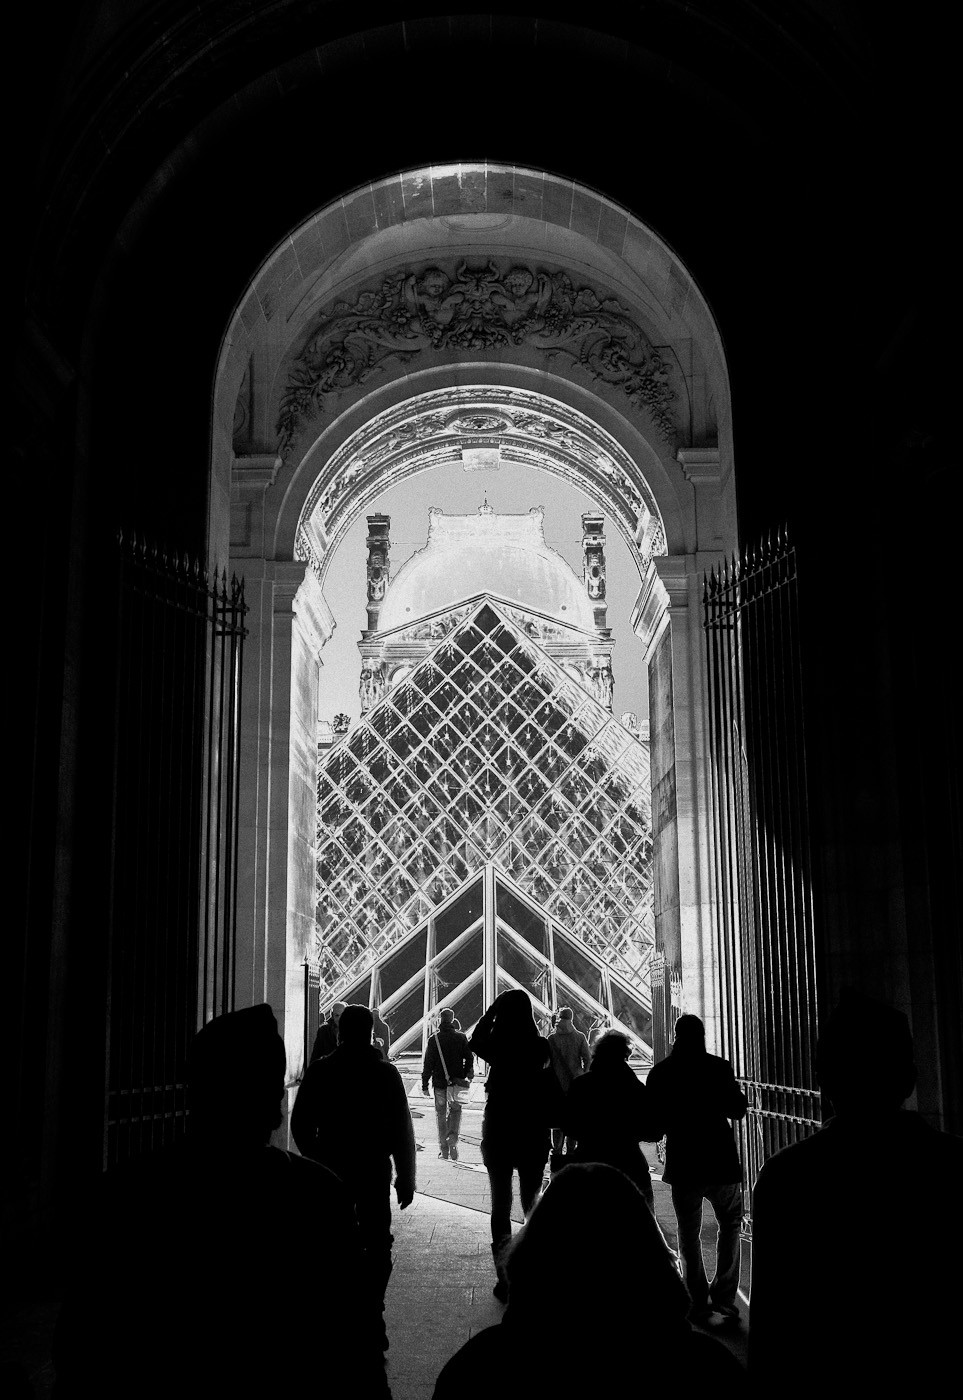 The passage towards the Louvre glass pyramid, solarized. Zeiss Biogon ZM 25/2.8 on SOny NEX-5n